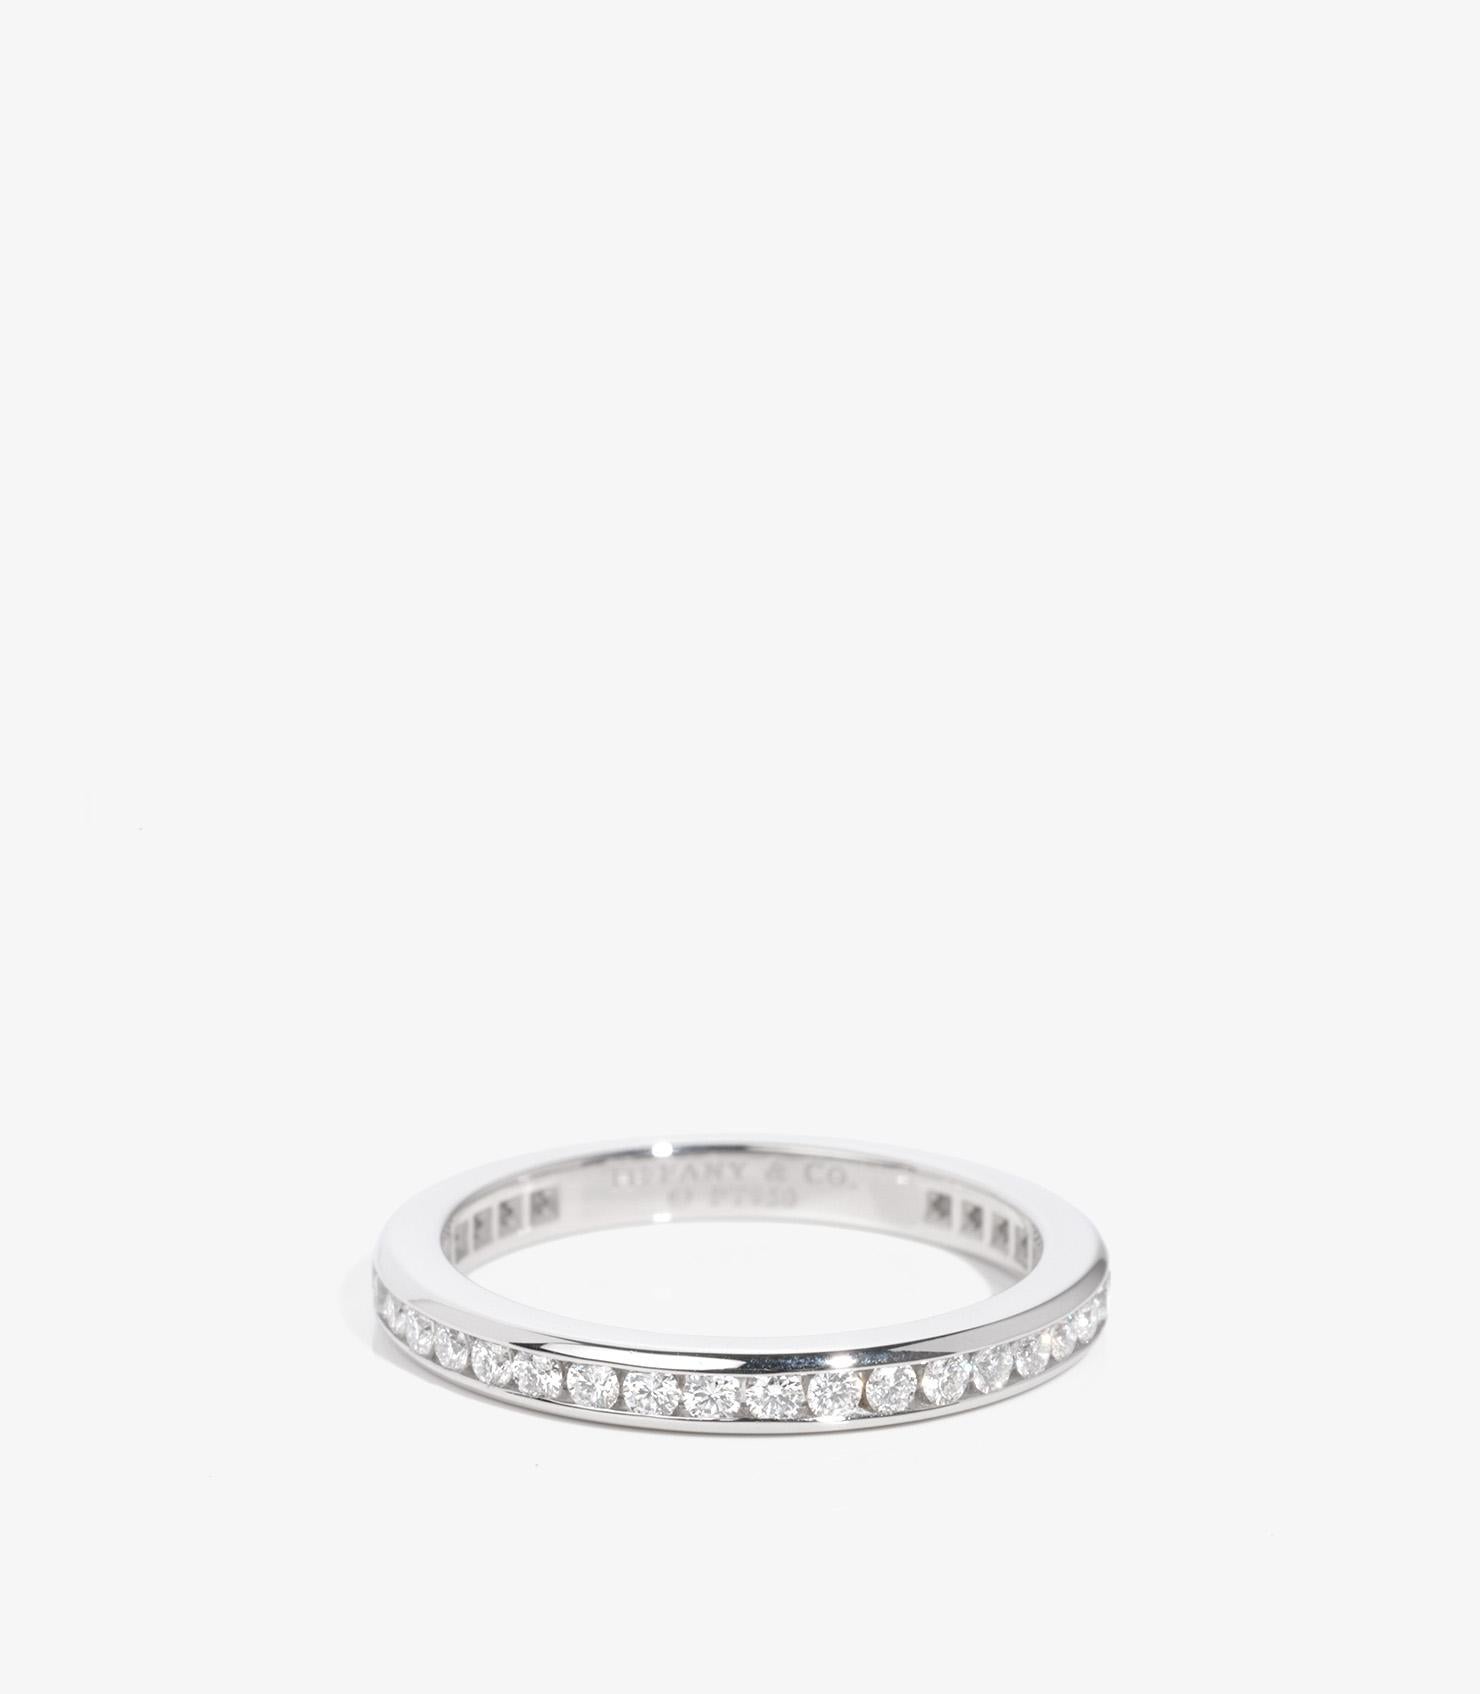 Tiffany & Co. Brilliant Cut Diamond Platinum Full Eternity Ring

Brand- Tiffany & Co.
Model- Full Eternity Ring
Product Type- Ring
Accompanied By- Tiffany & Co. Box
Material(s)- Platinum
Gemstone- Diamond
UK Ring Size- I 3/4
EU Ring Size- 48
US Ring